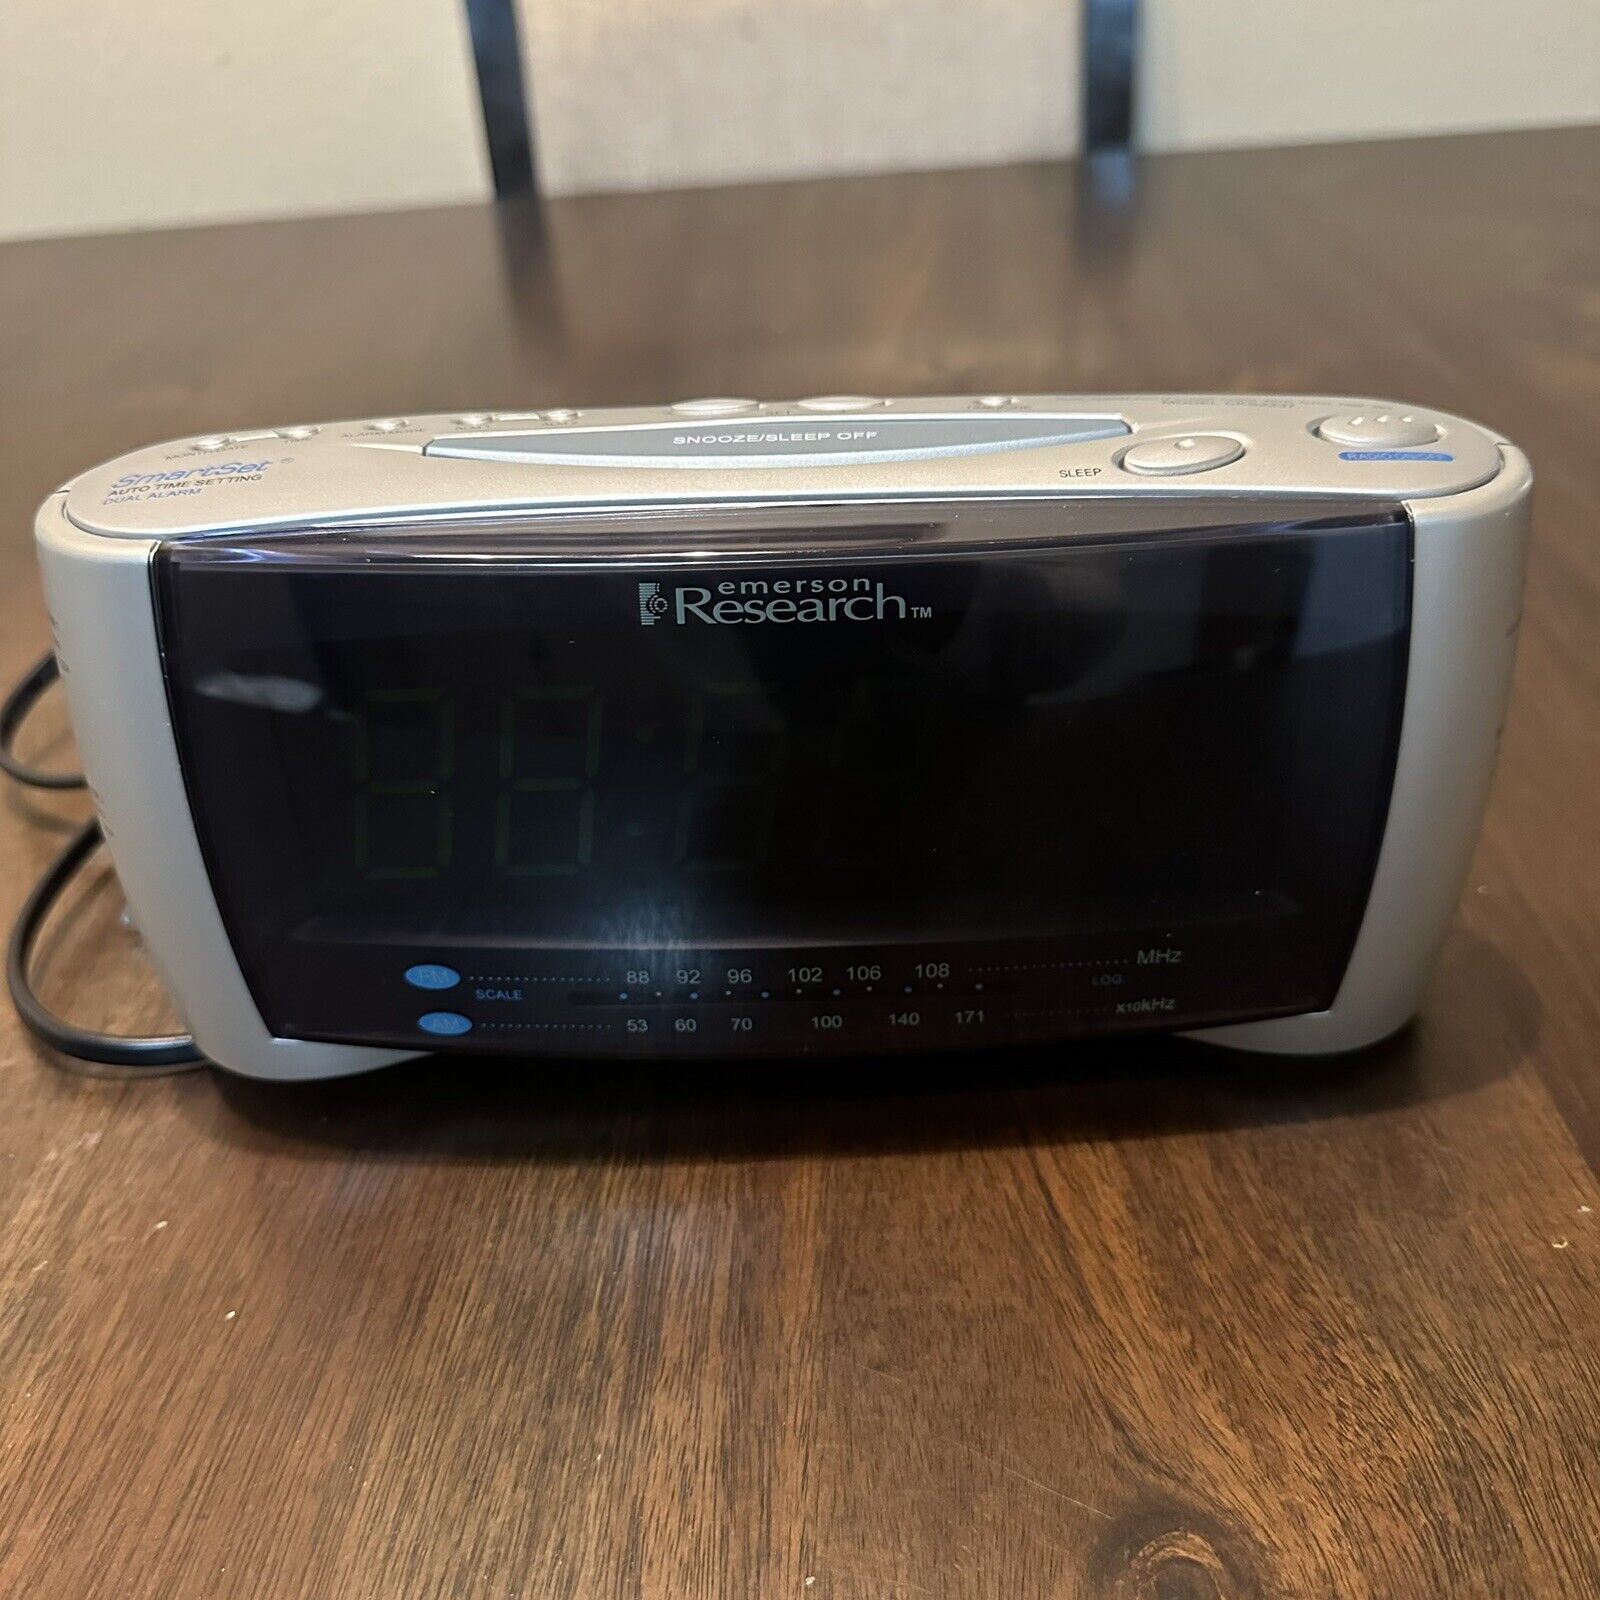 Emerson Research SmartSet Dual Alarm Clock Radio In Silver Automatic Time AM-FM